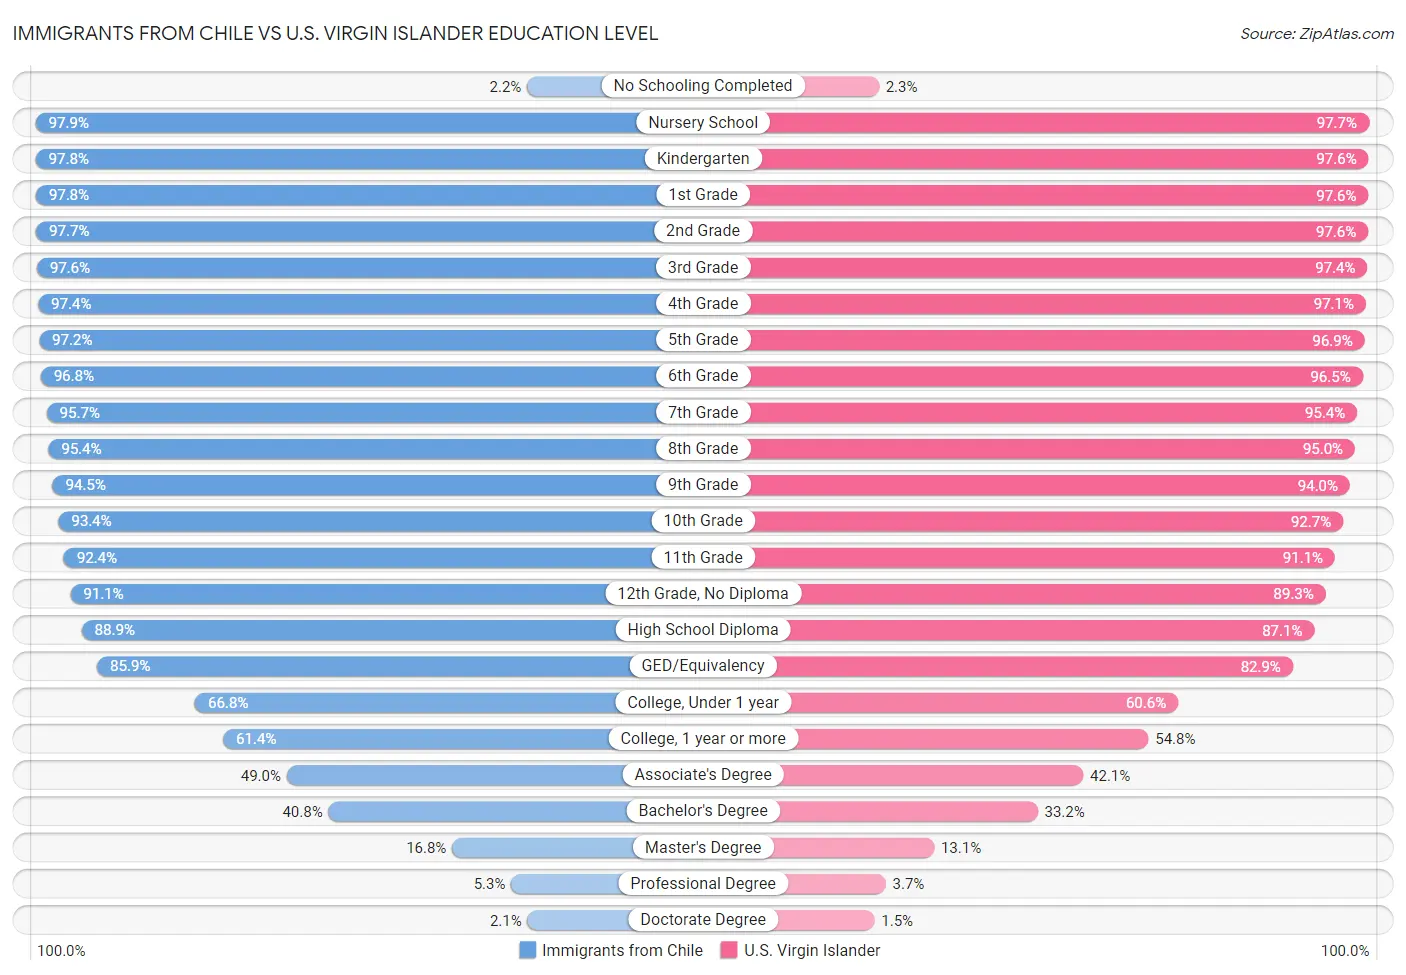 Immigrants from Chile vs U.S. Virgin Islander Education Level